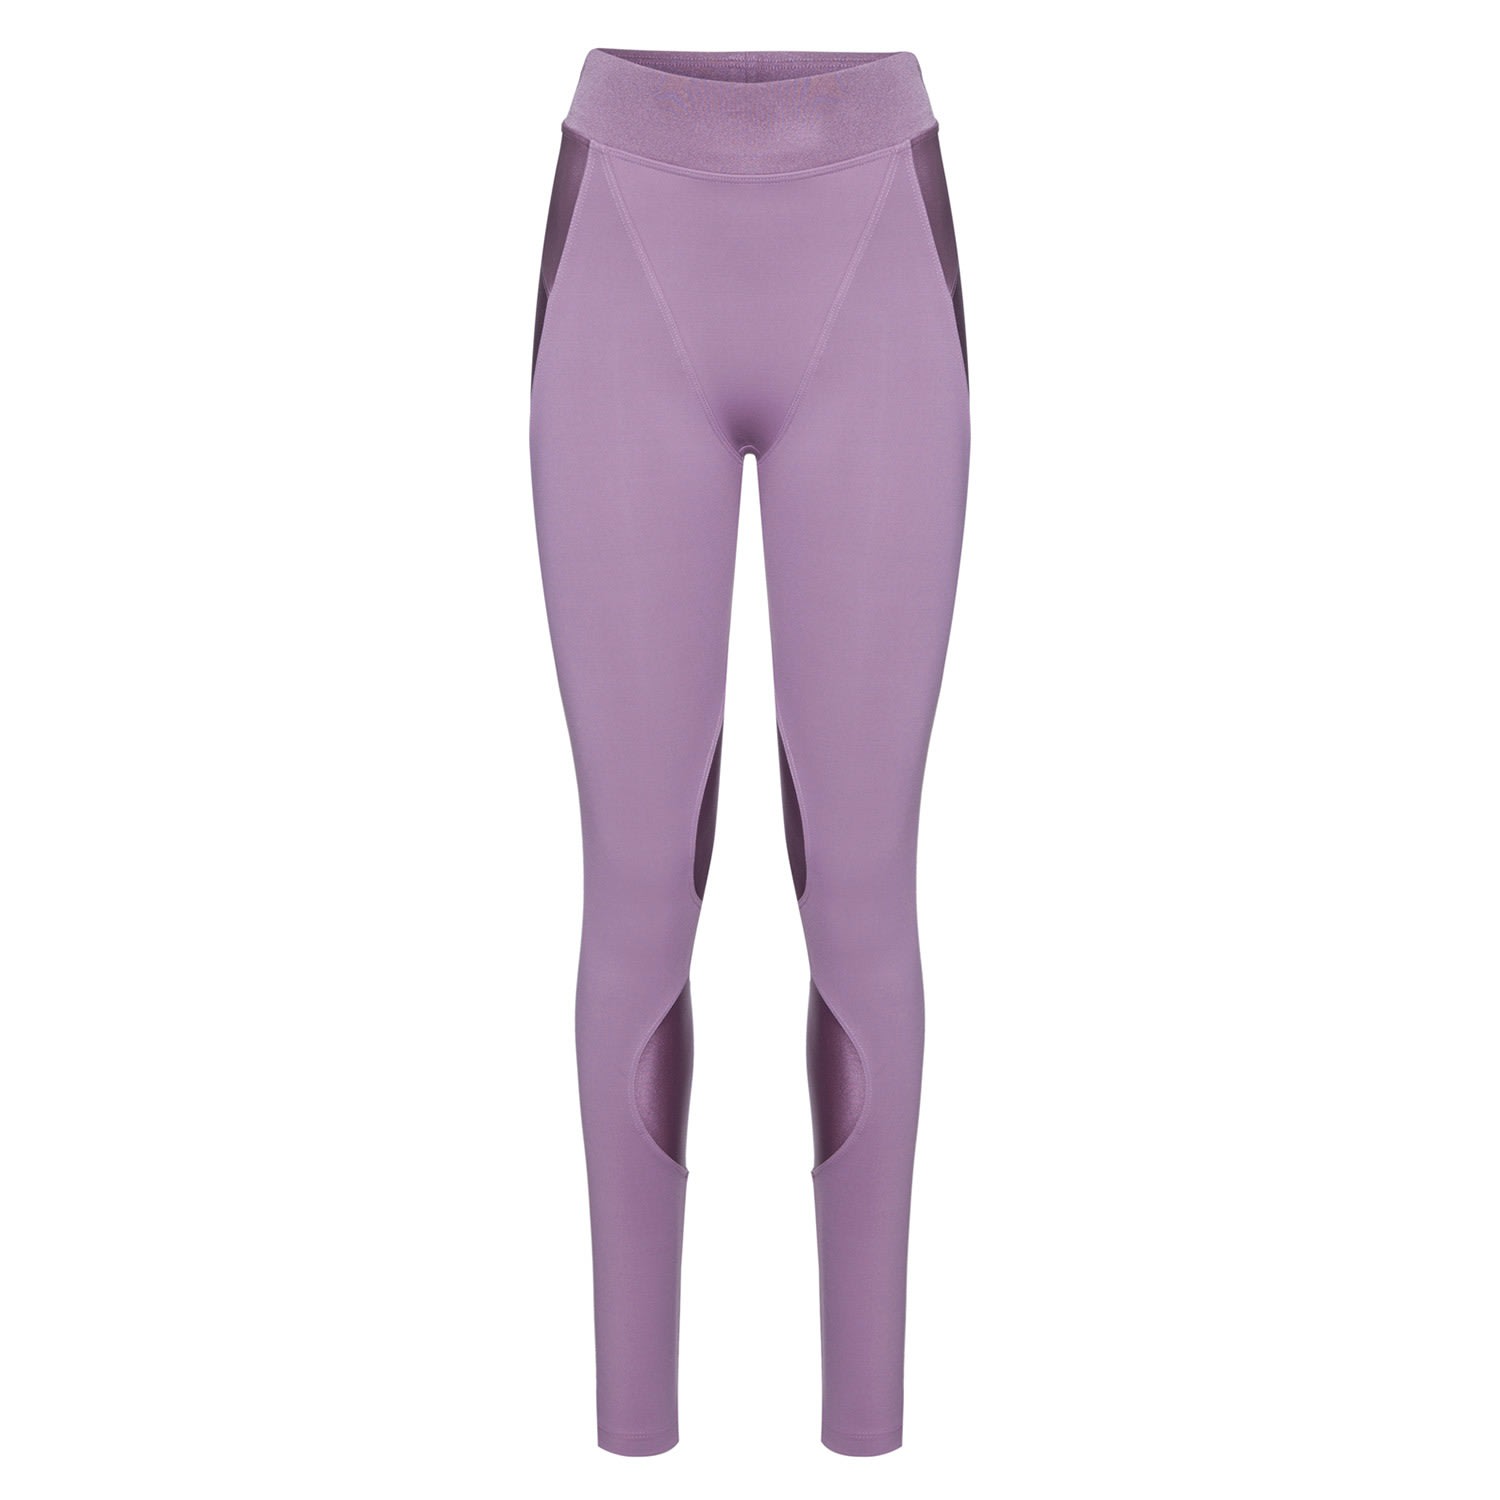 Balletto Athleisure Couture Women's Pink / Purple Legging Cutouts Glow - Pink & Purple